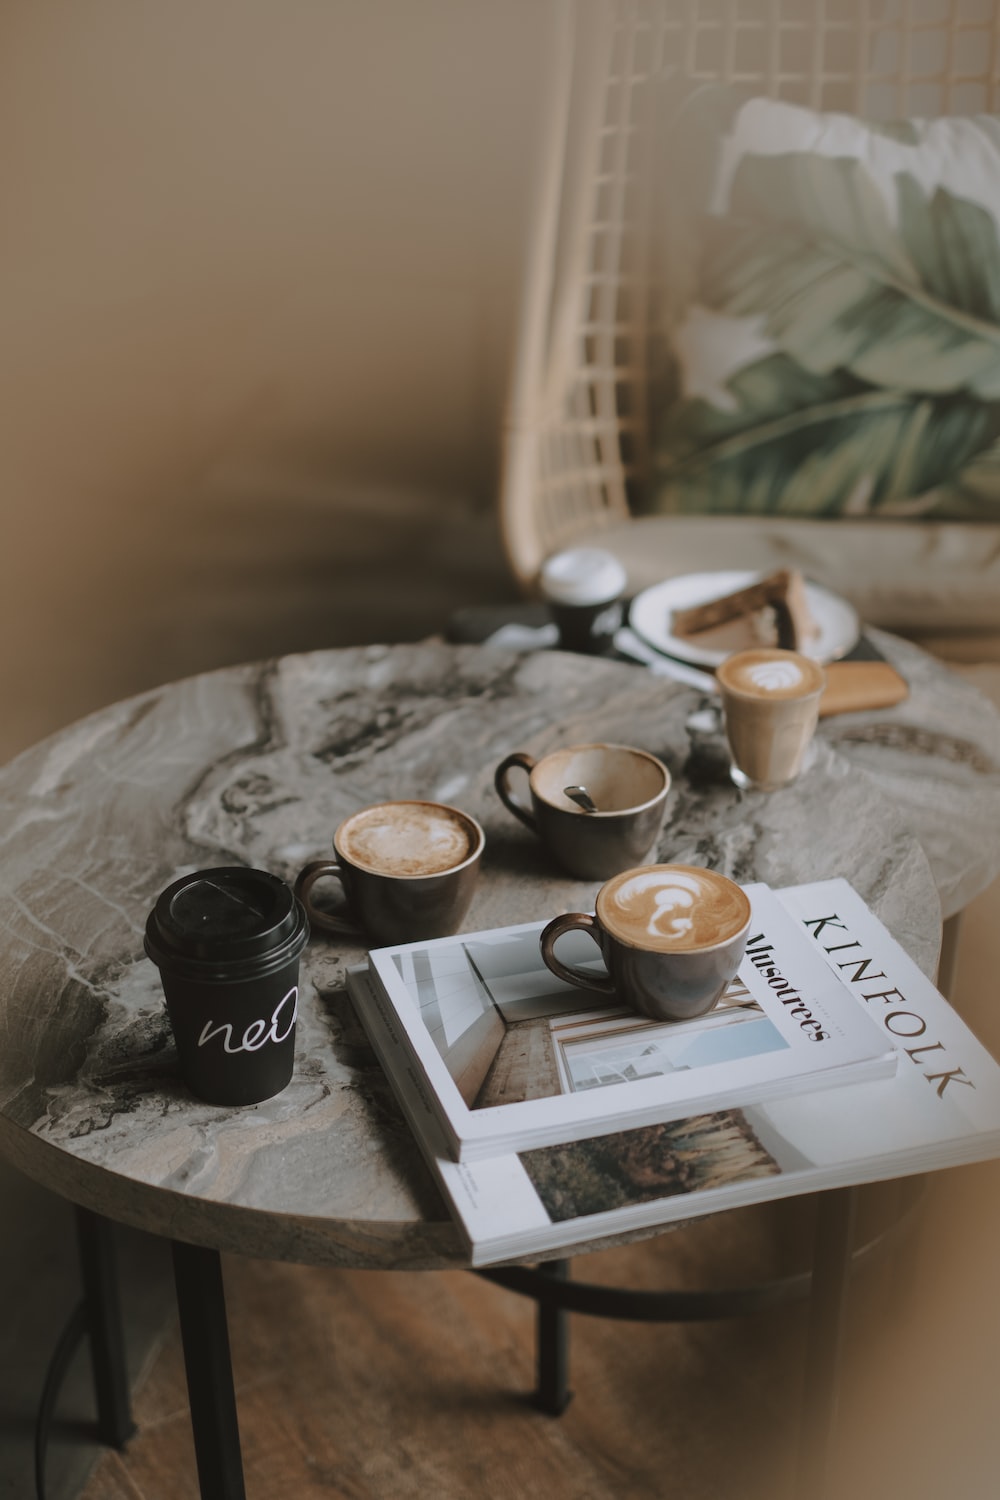 coffee latte on table